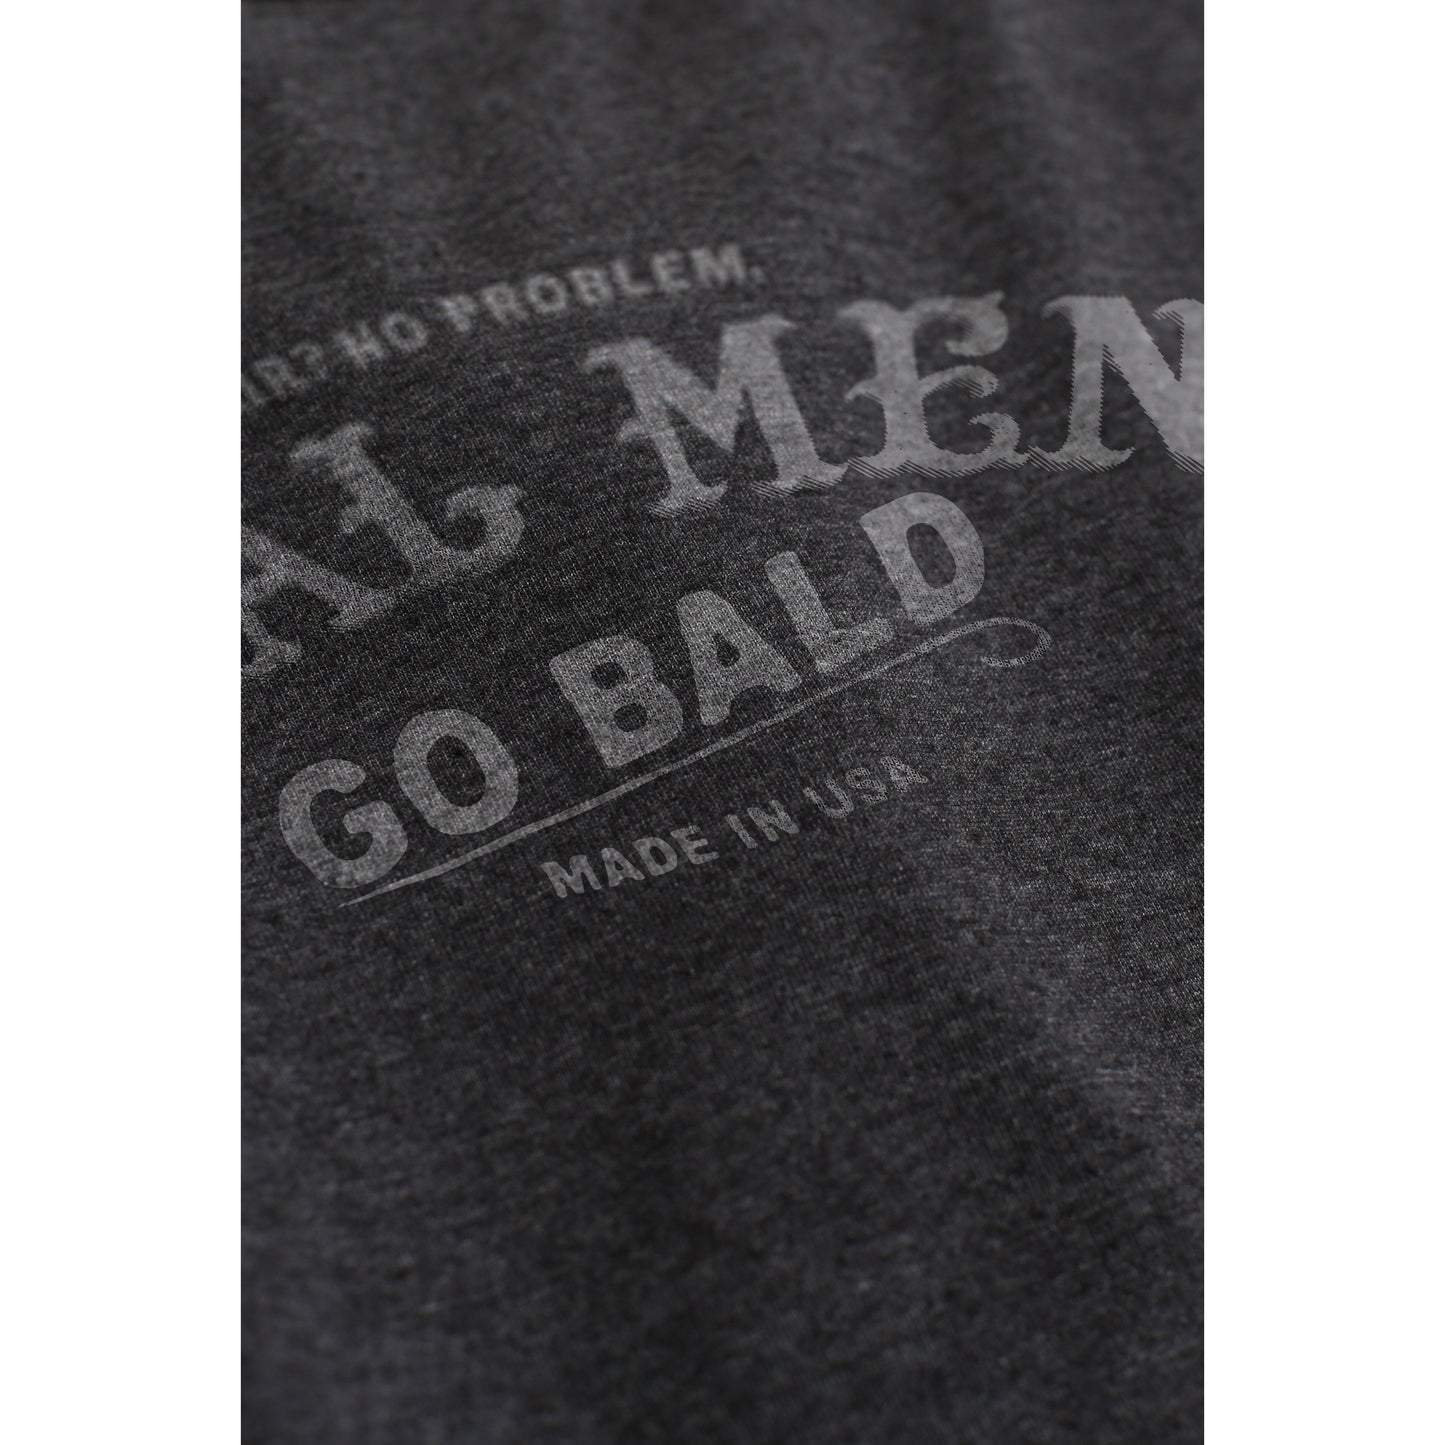 Real Men Go Bald Charcoal Printed Graphic Men's Crew T-Shirt Tee Closeup Details